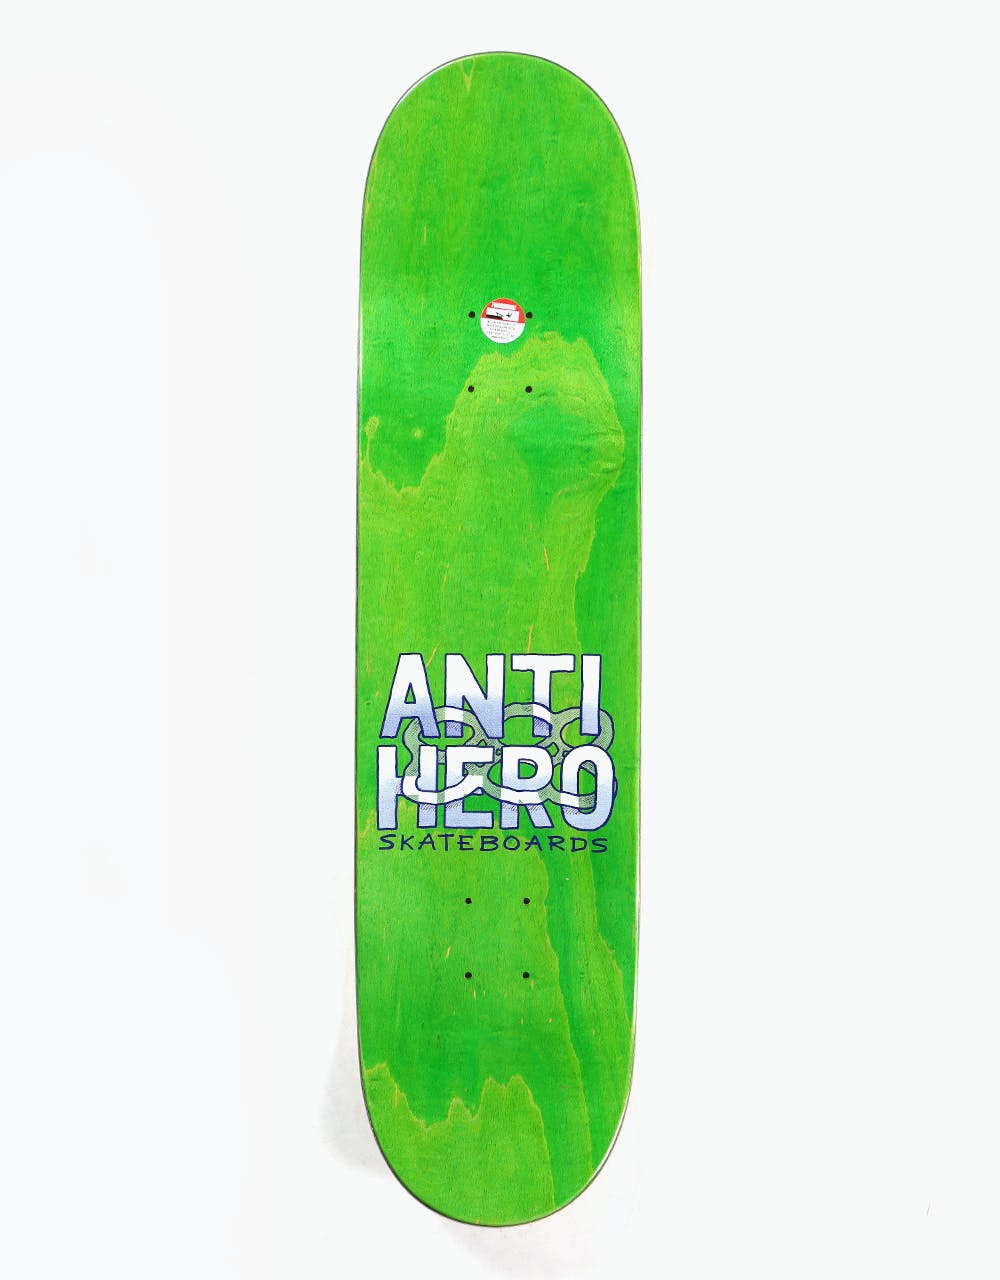 Anti Hero Pfanner Plastics Skateboard Deck - 8.06"